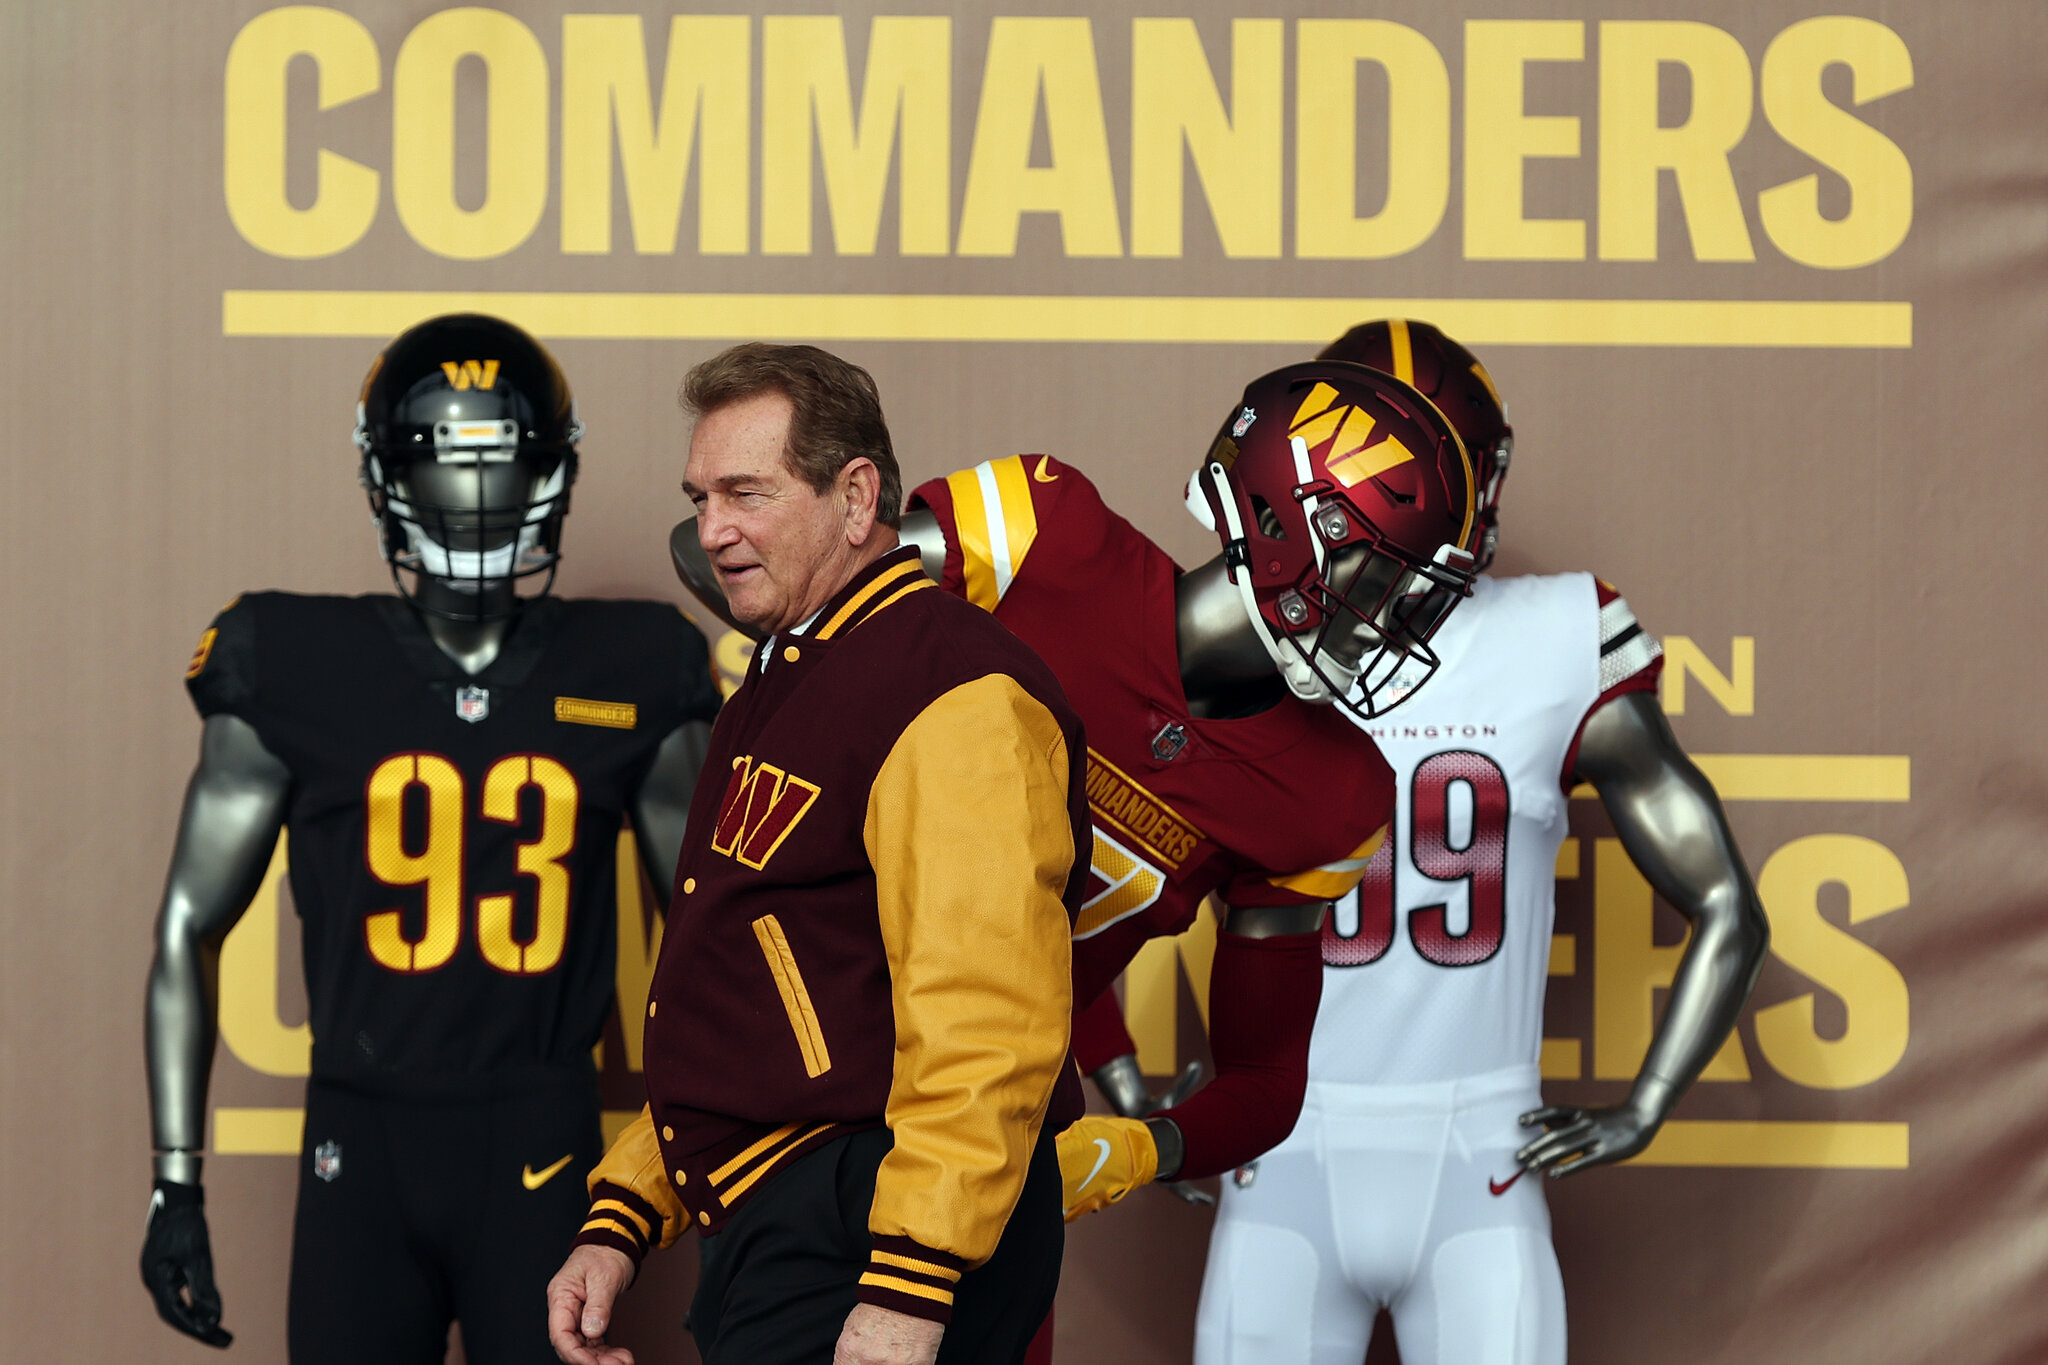 The Washington Football Team Has Rebranded as the Commanders